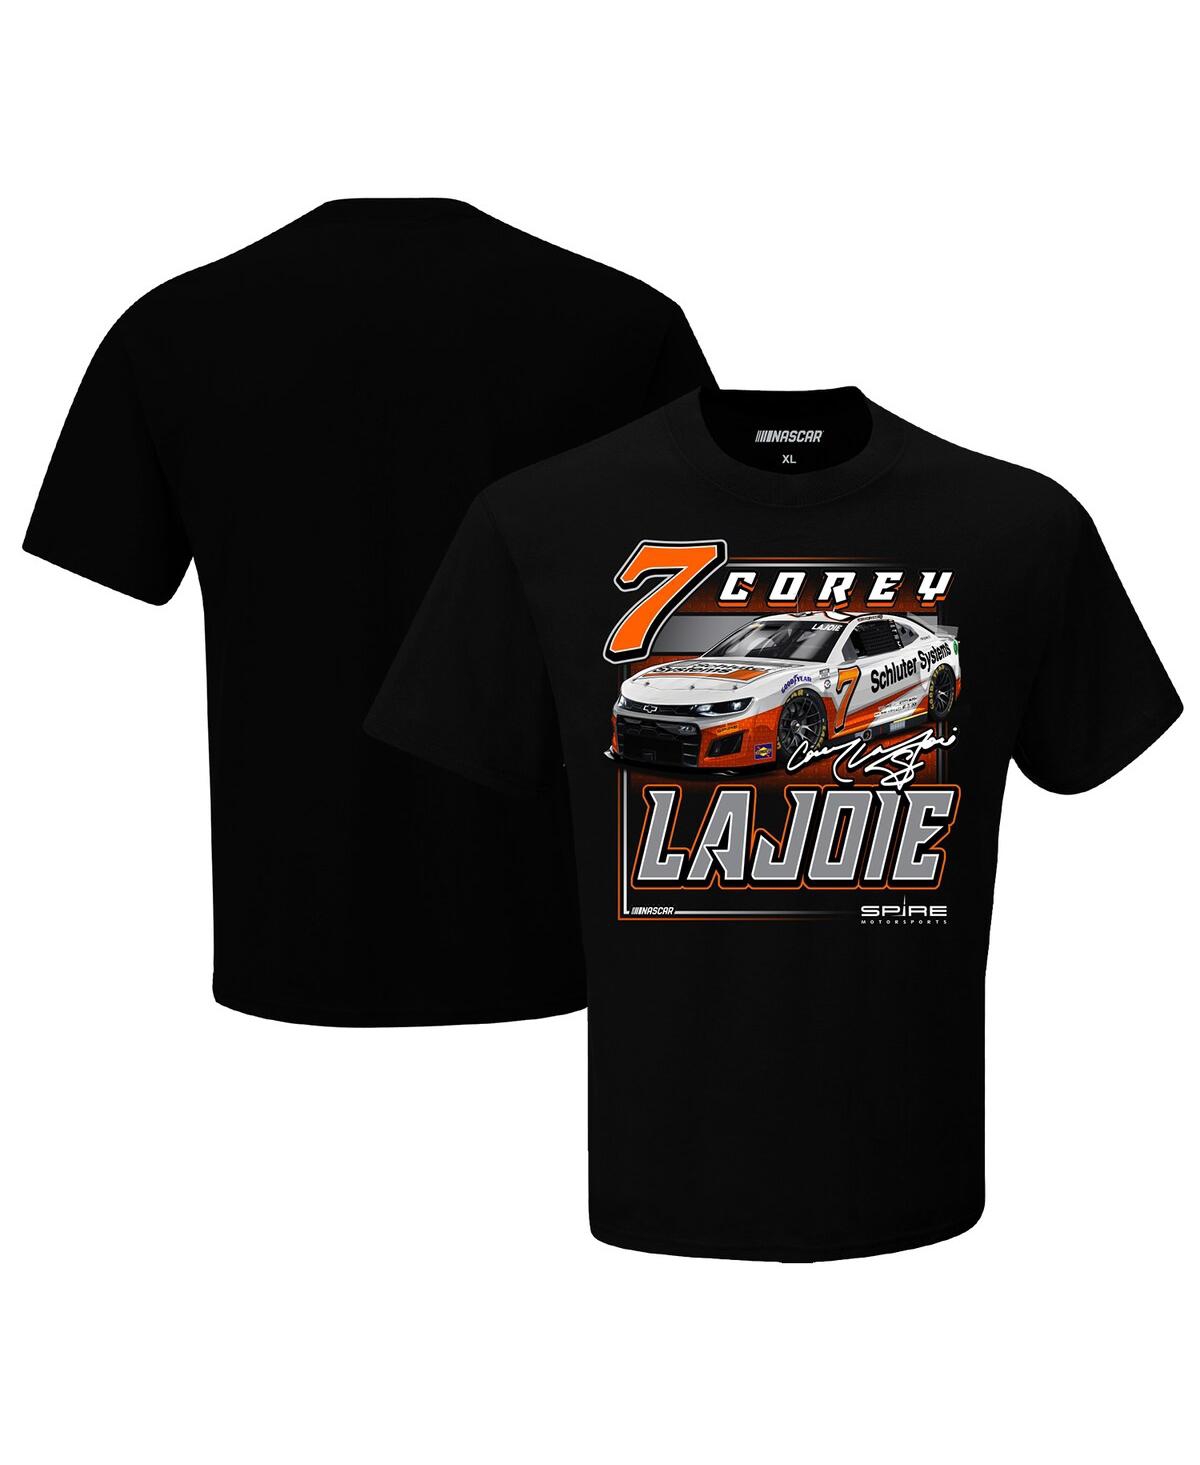 Checkered Flag Sports Men's  Black Corey Lajoie Schluter Systems Car T-shirt